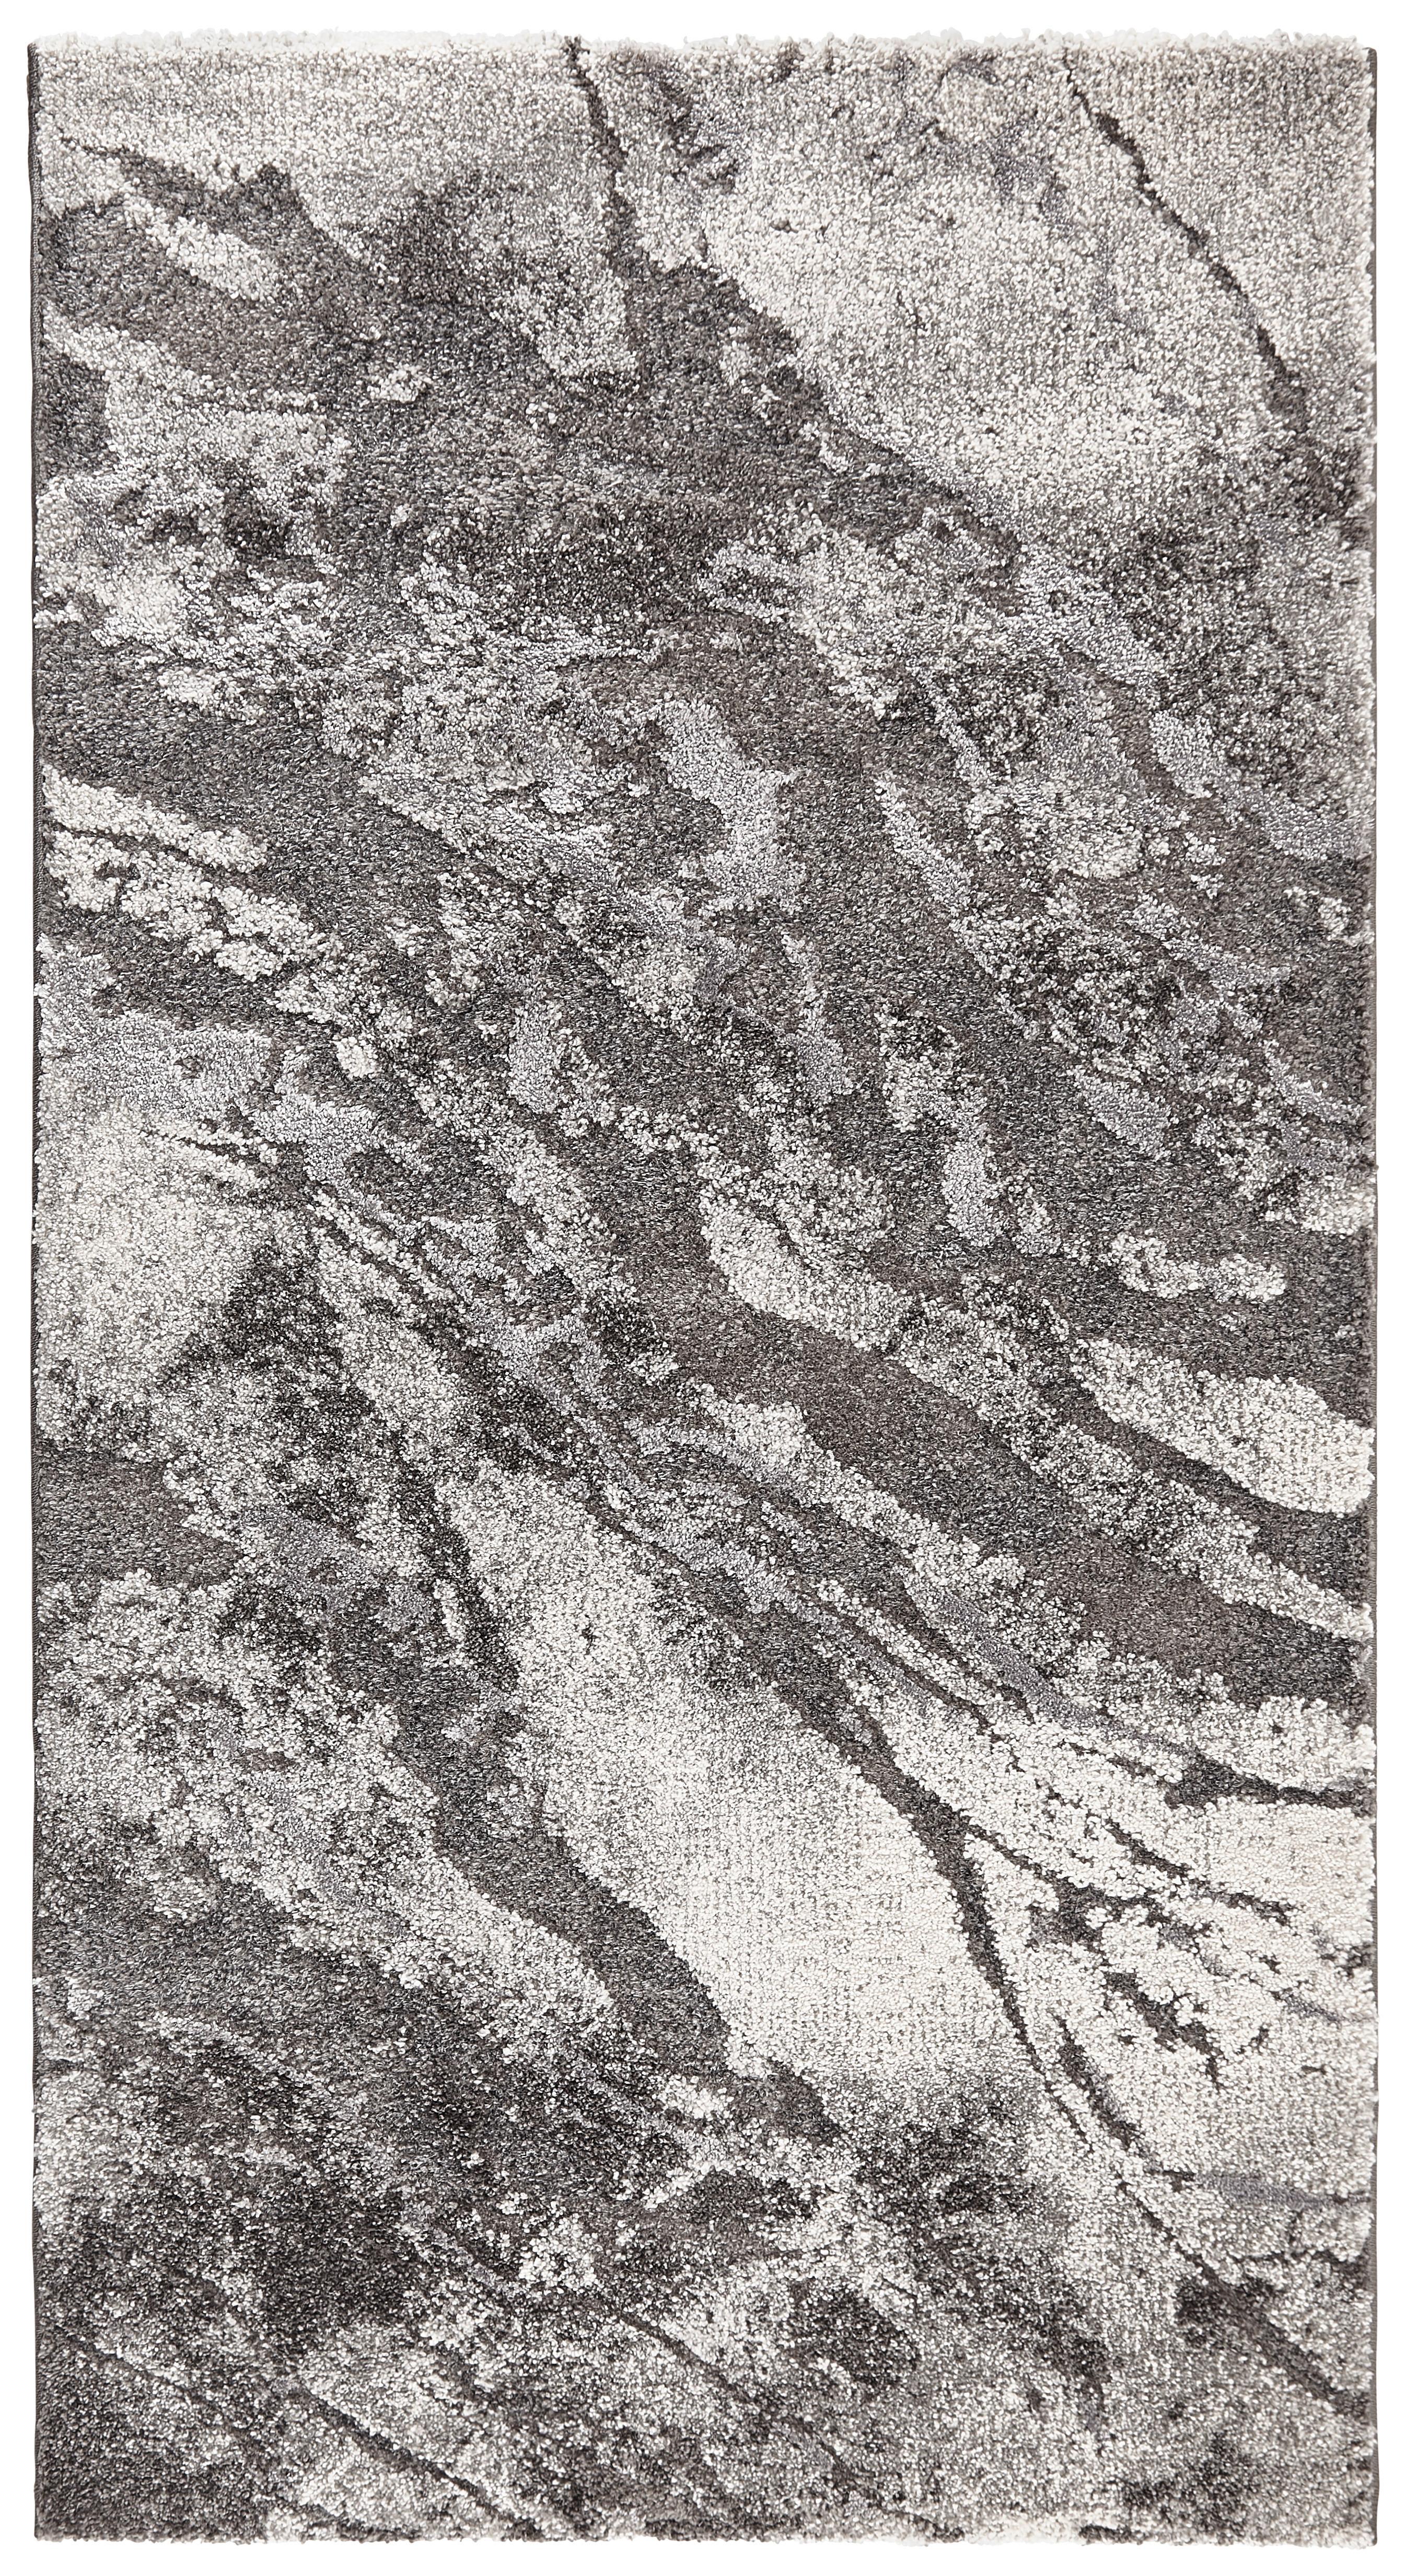 Tkaný Koberec Marmor 1, 80/150cm - šedá, Moderní, textil (80/150cm) - Modern Living